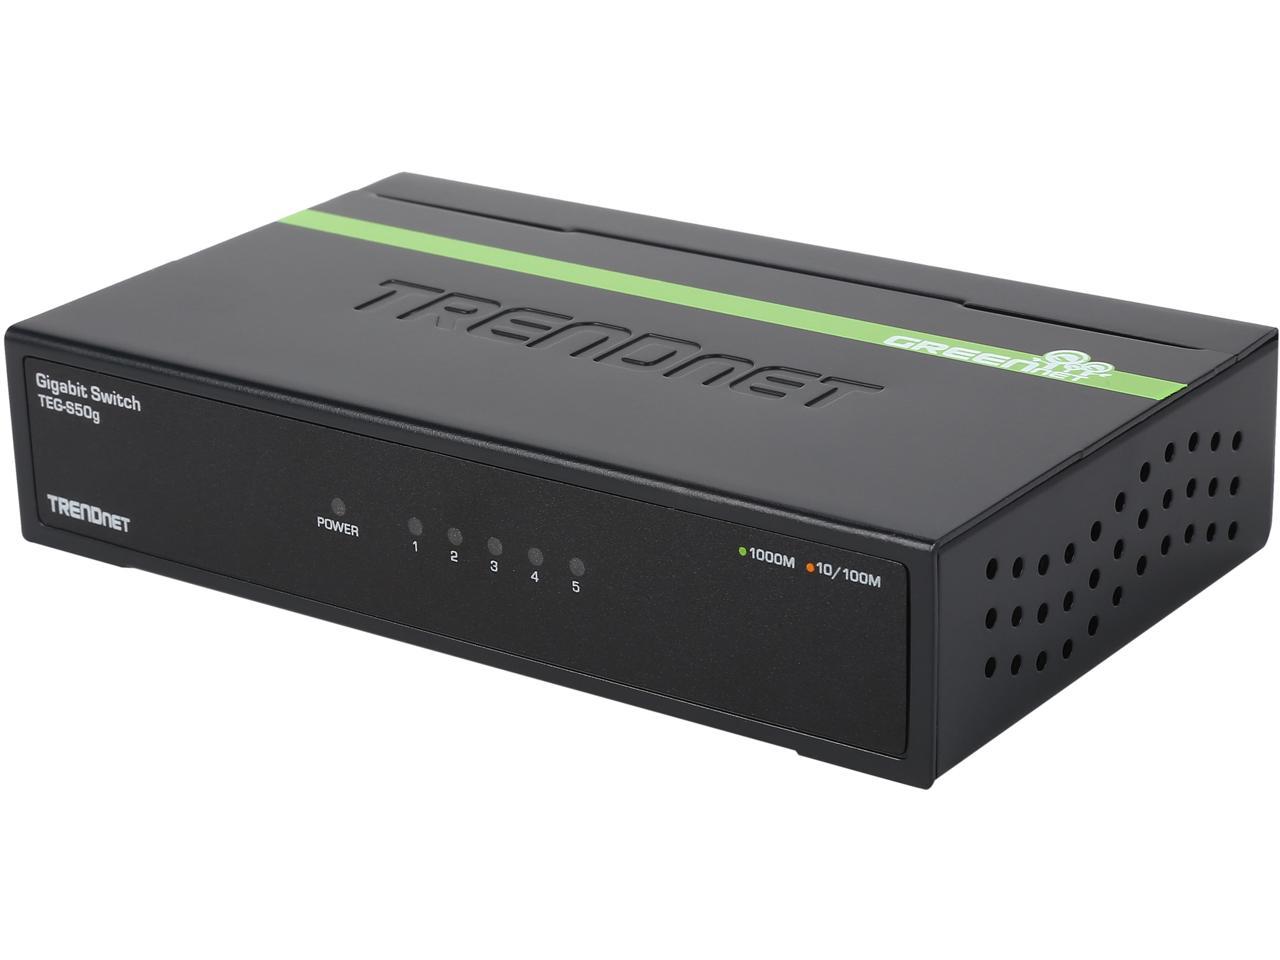 TRENDnet TEG-S50G Unmanaged 5-Port Gigabit GREENnet Switch